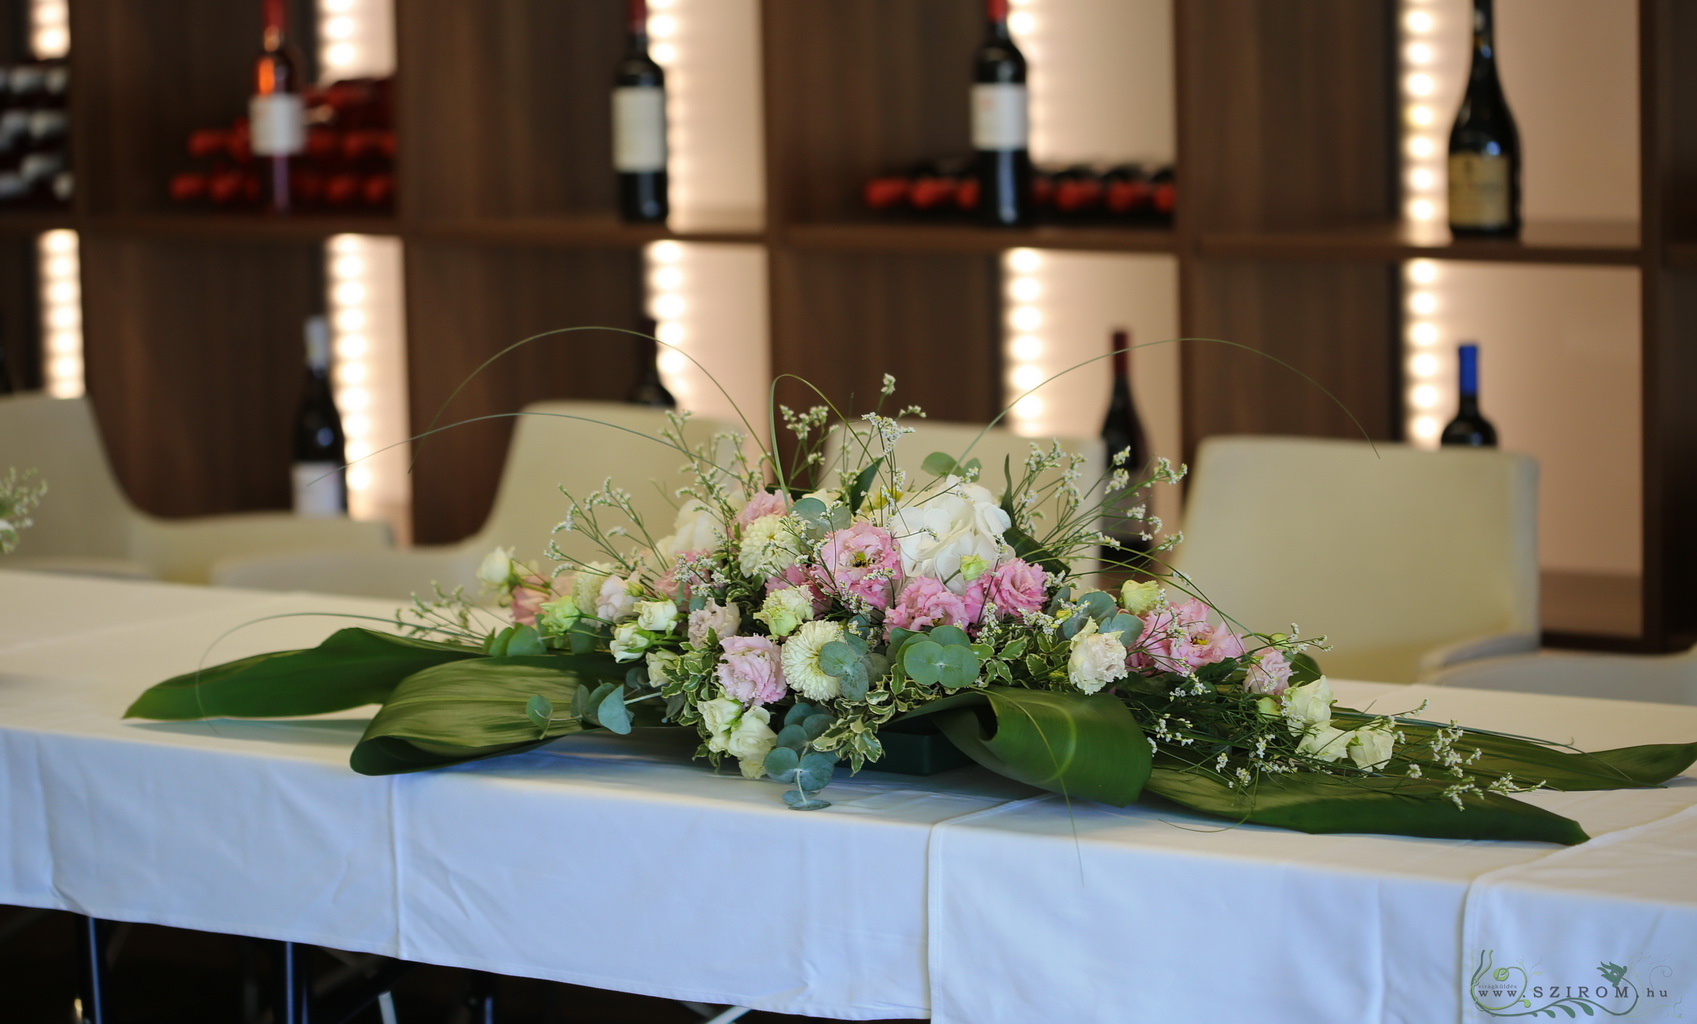 flower delivery Budapest - Main table centerpiece,  Locavore Budapest (hydrangea, lisianthus, limonium, white, pink), wedding